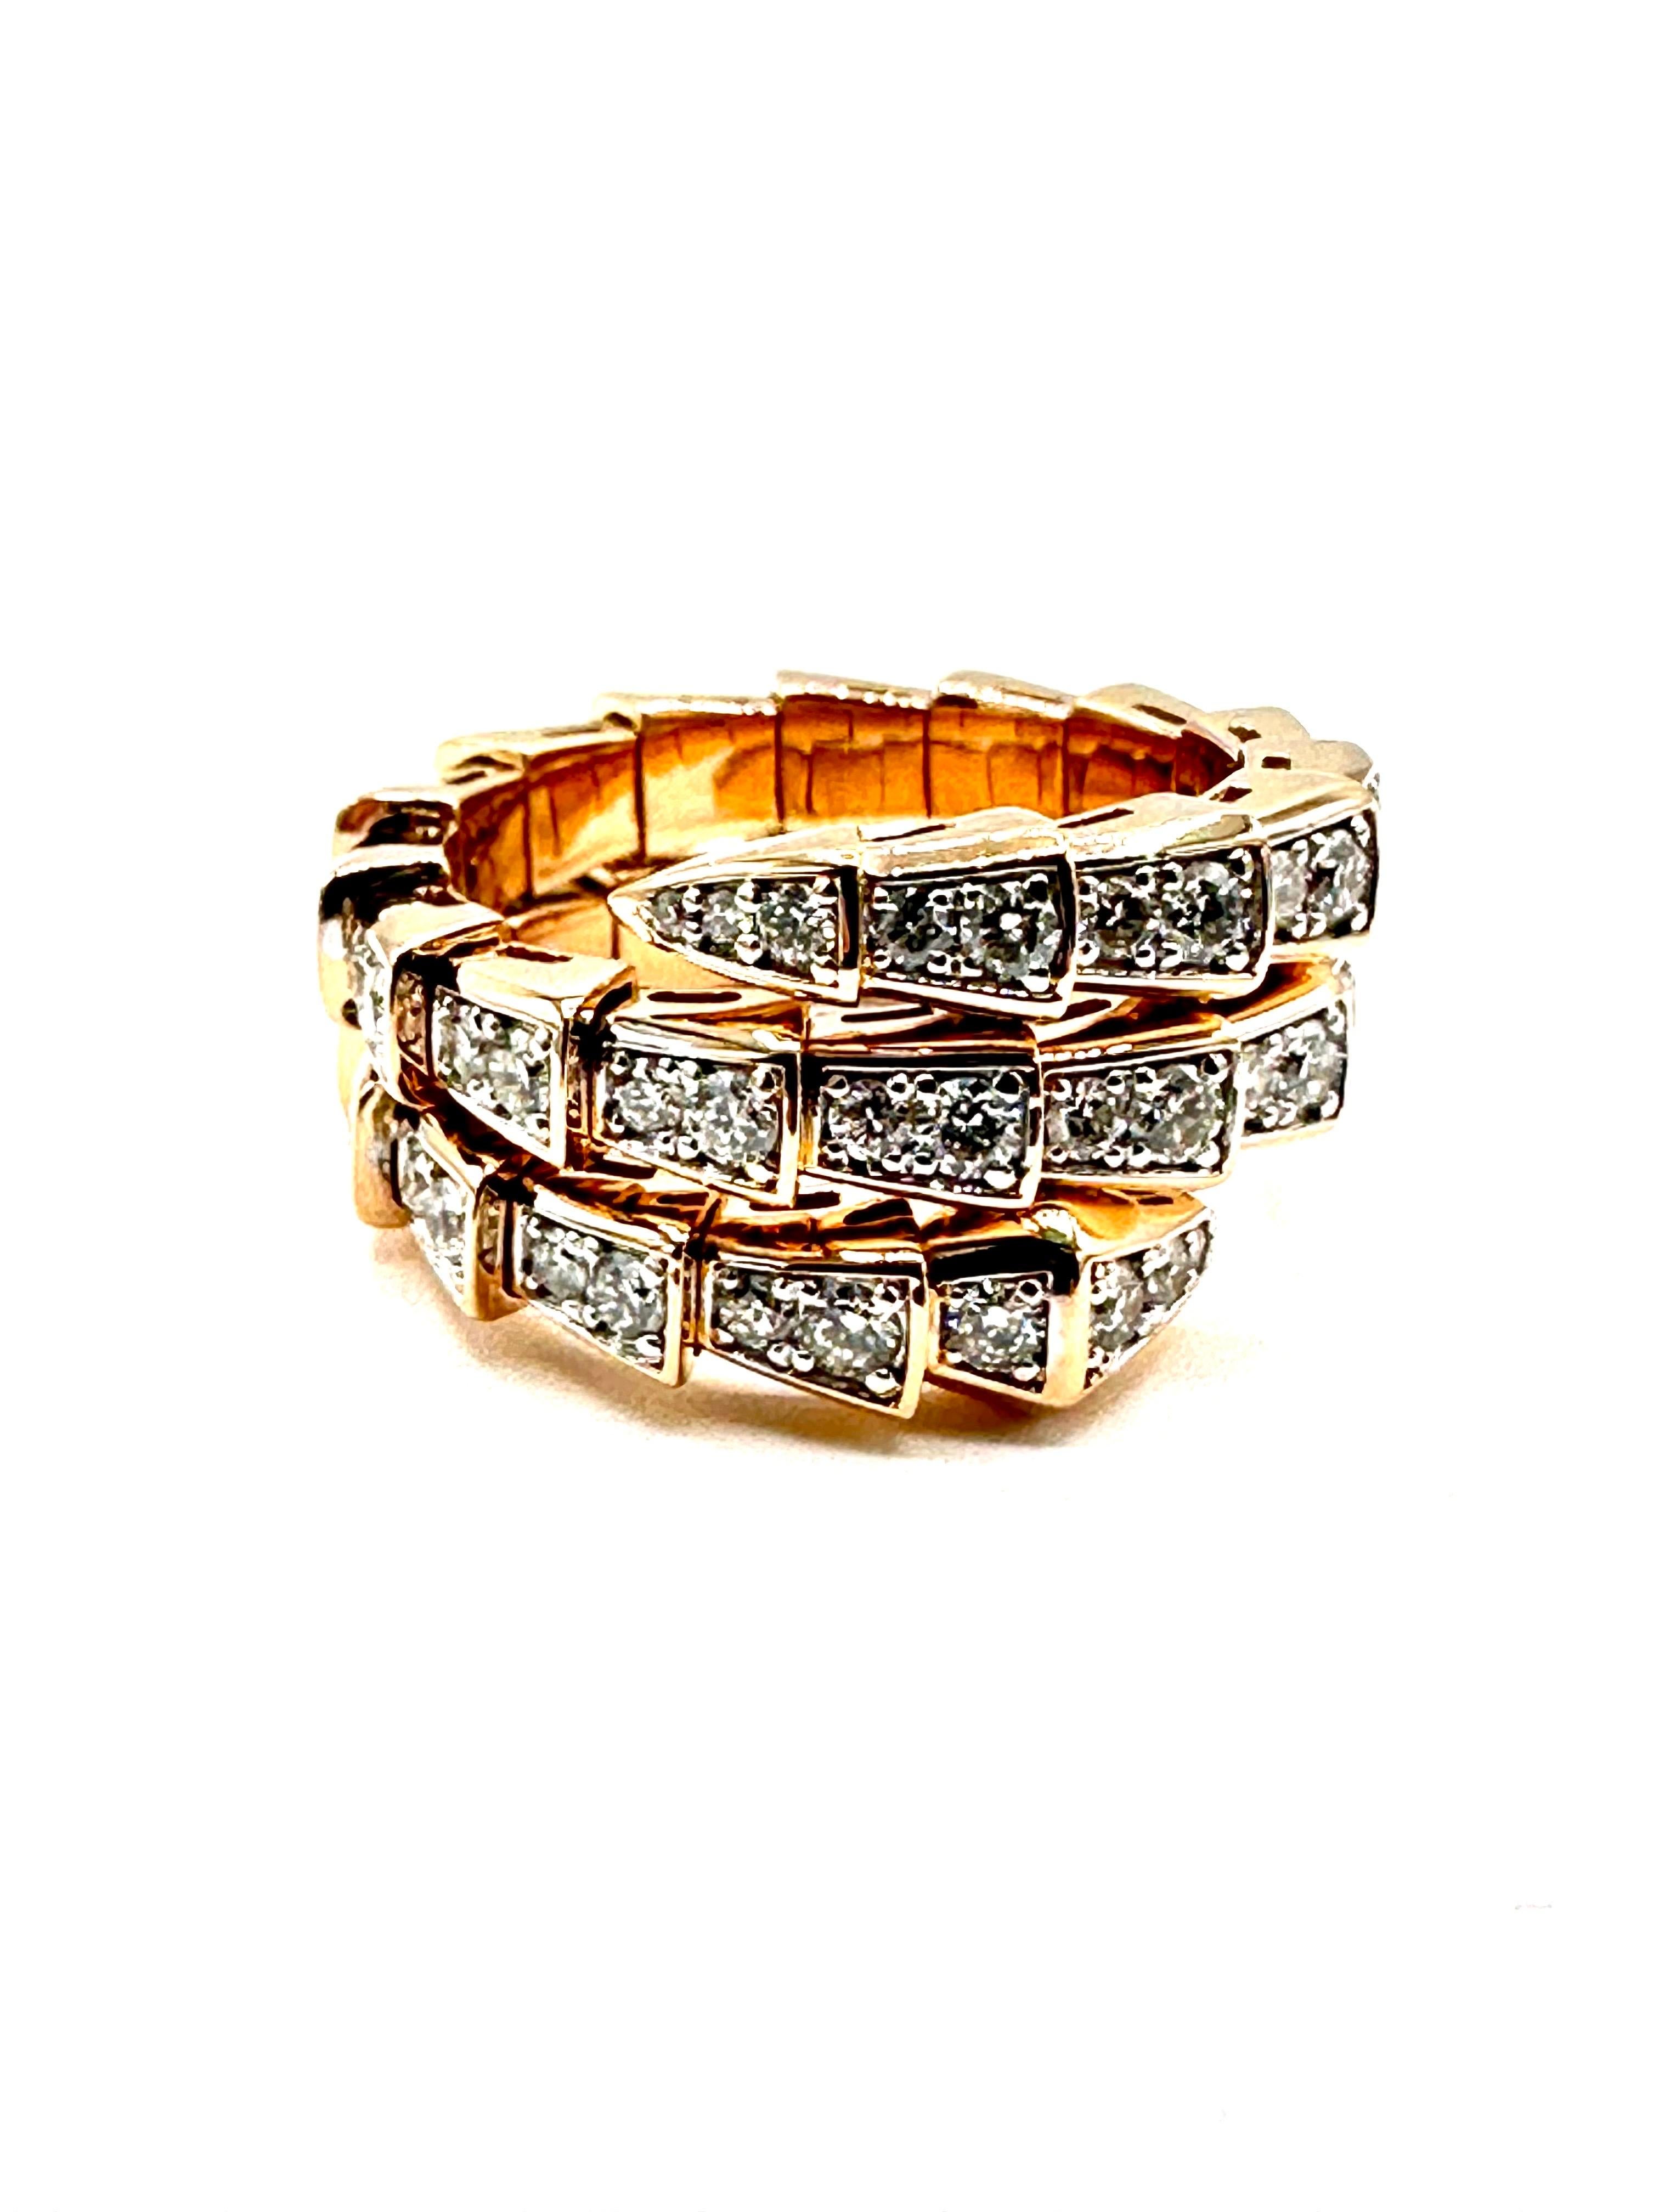 1.64 Carat Bulgari Serpenti Viper Two Coil Ring in 18K Rose Gold Excellent état - En vente à Chevy Chase, MD